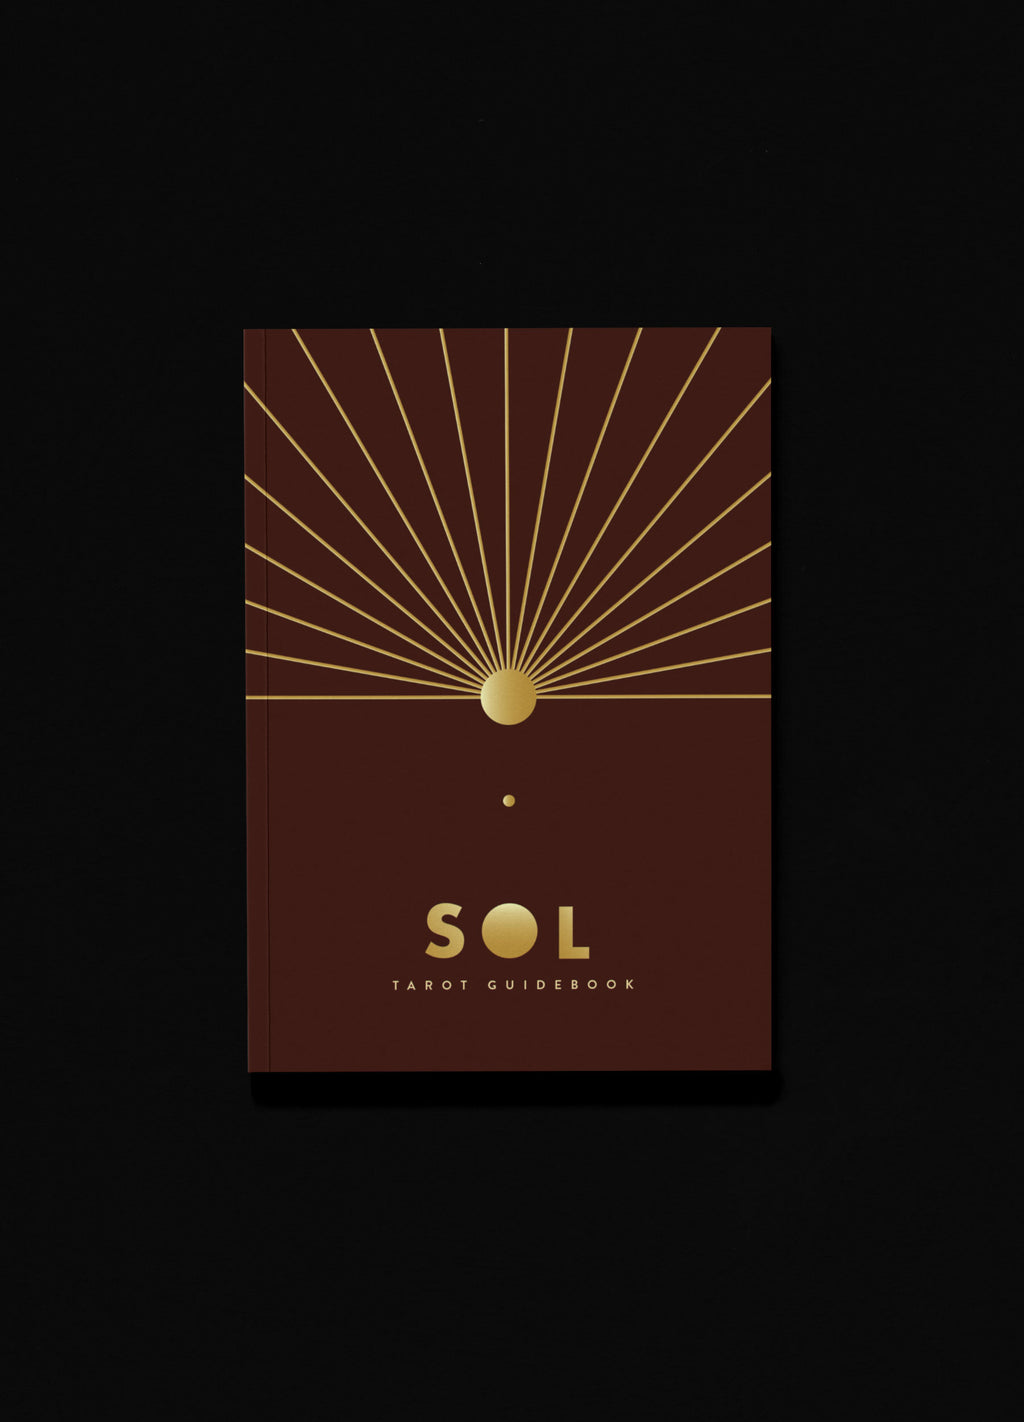 SOL Tarot Guidebook by Cocorrina & Co